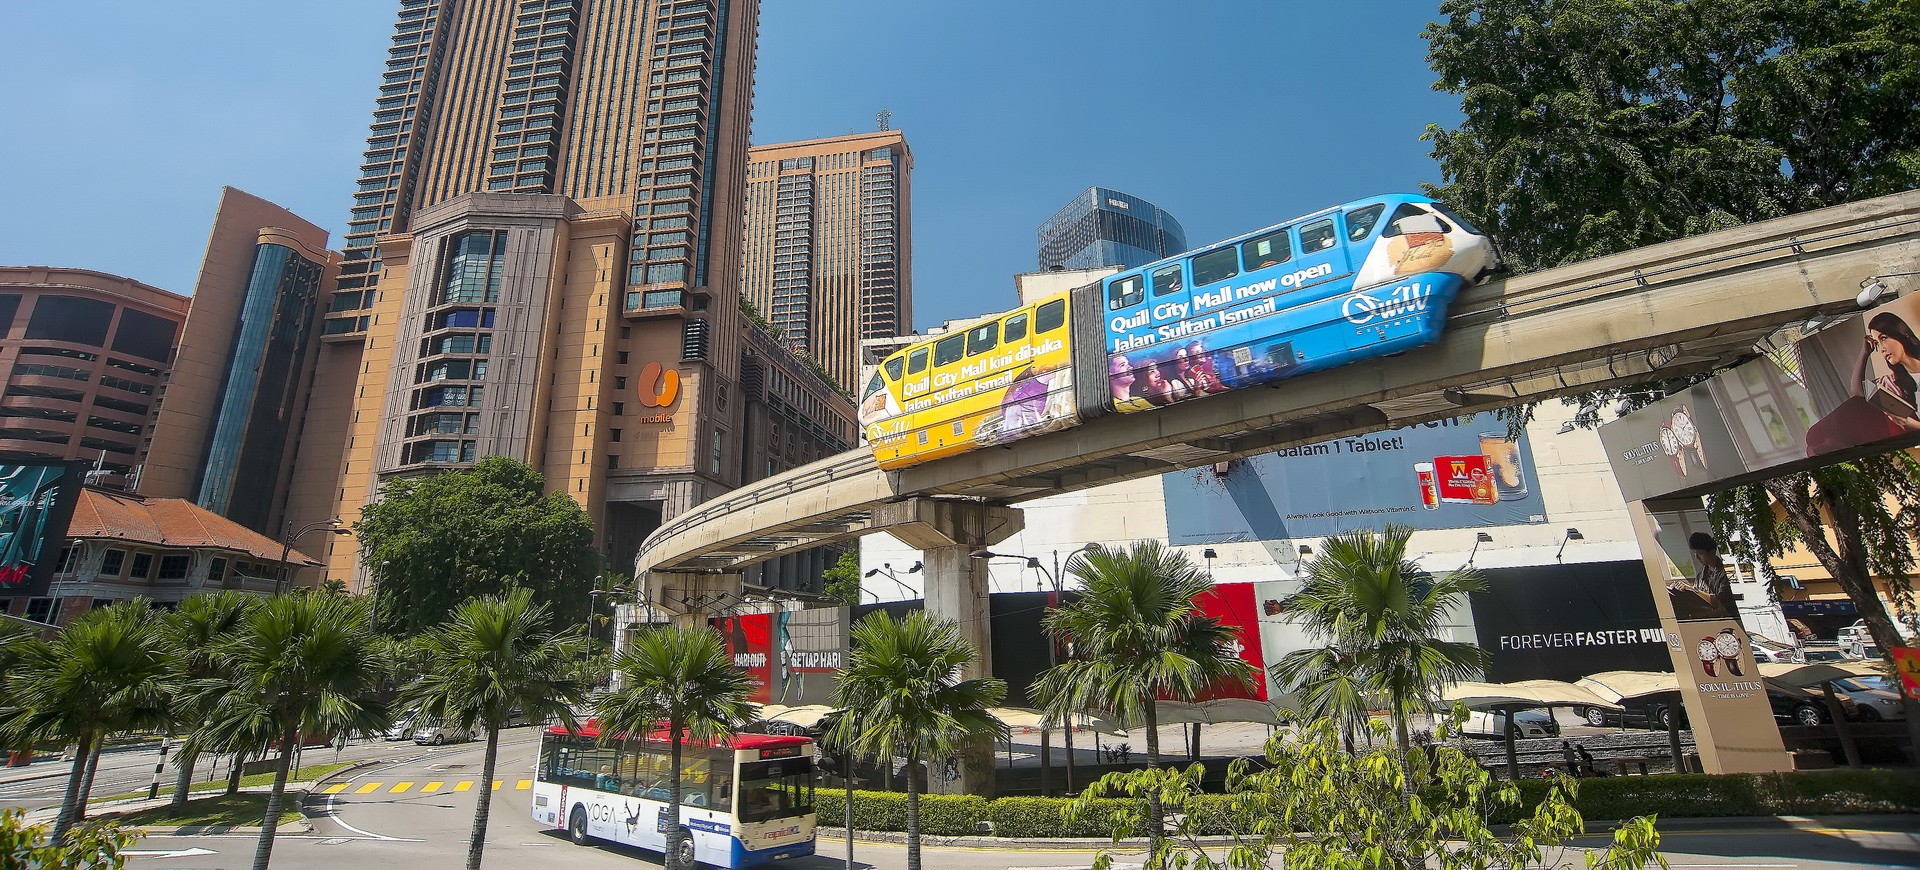 Malaisie Kuala Lumpur Monorail